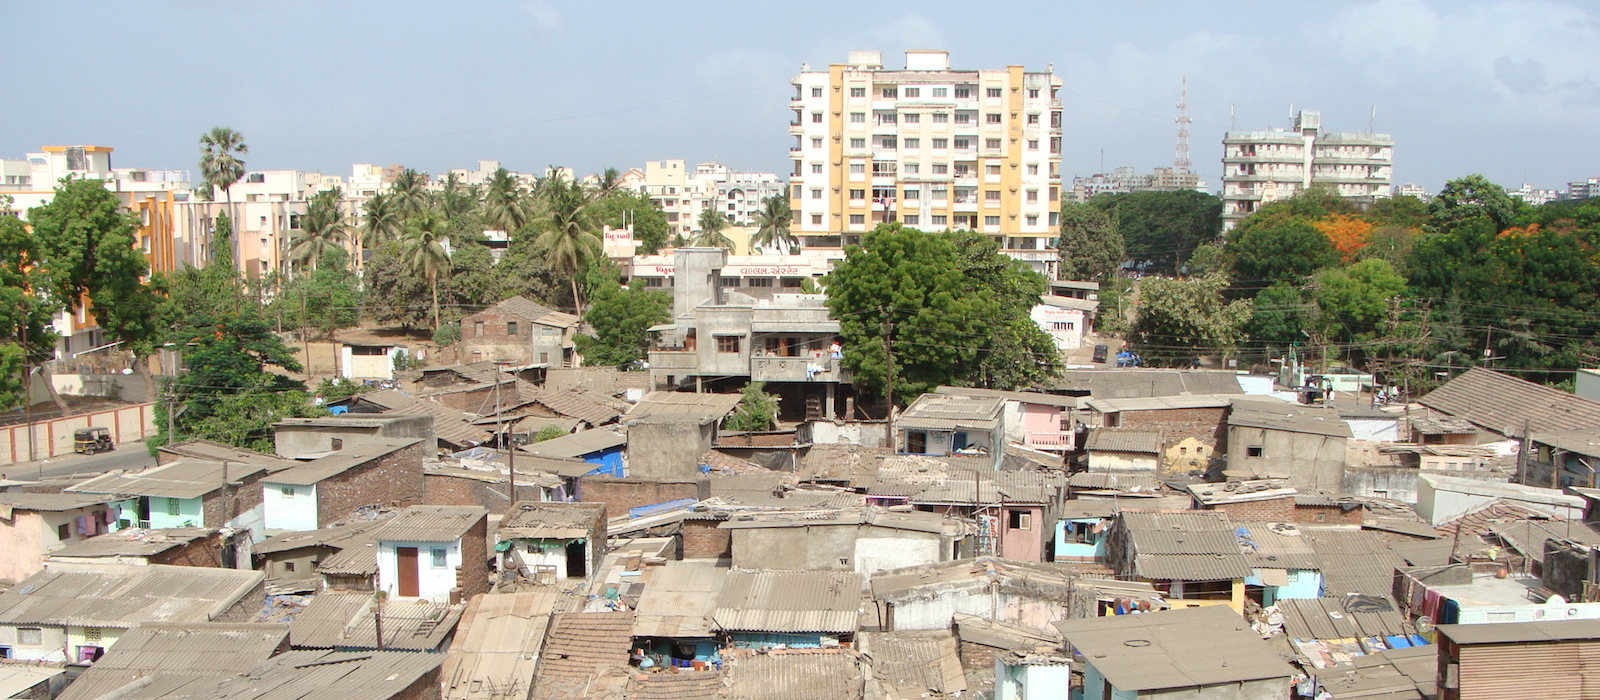 Slum free city action plan